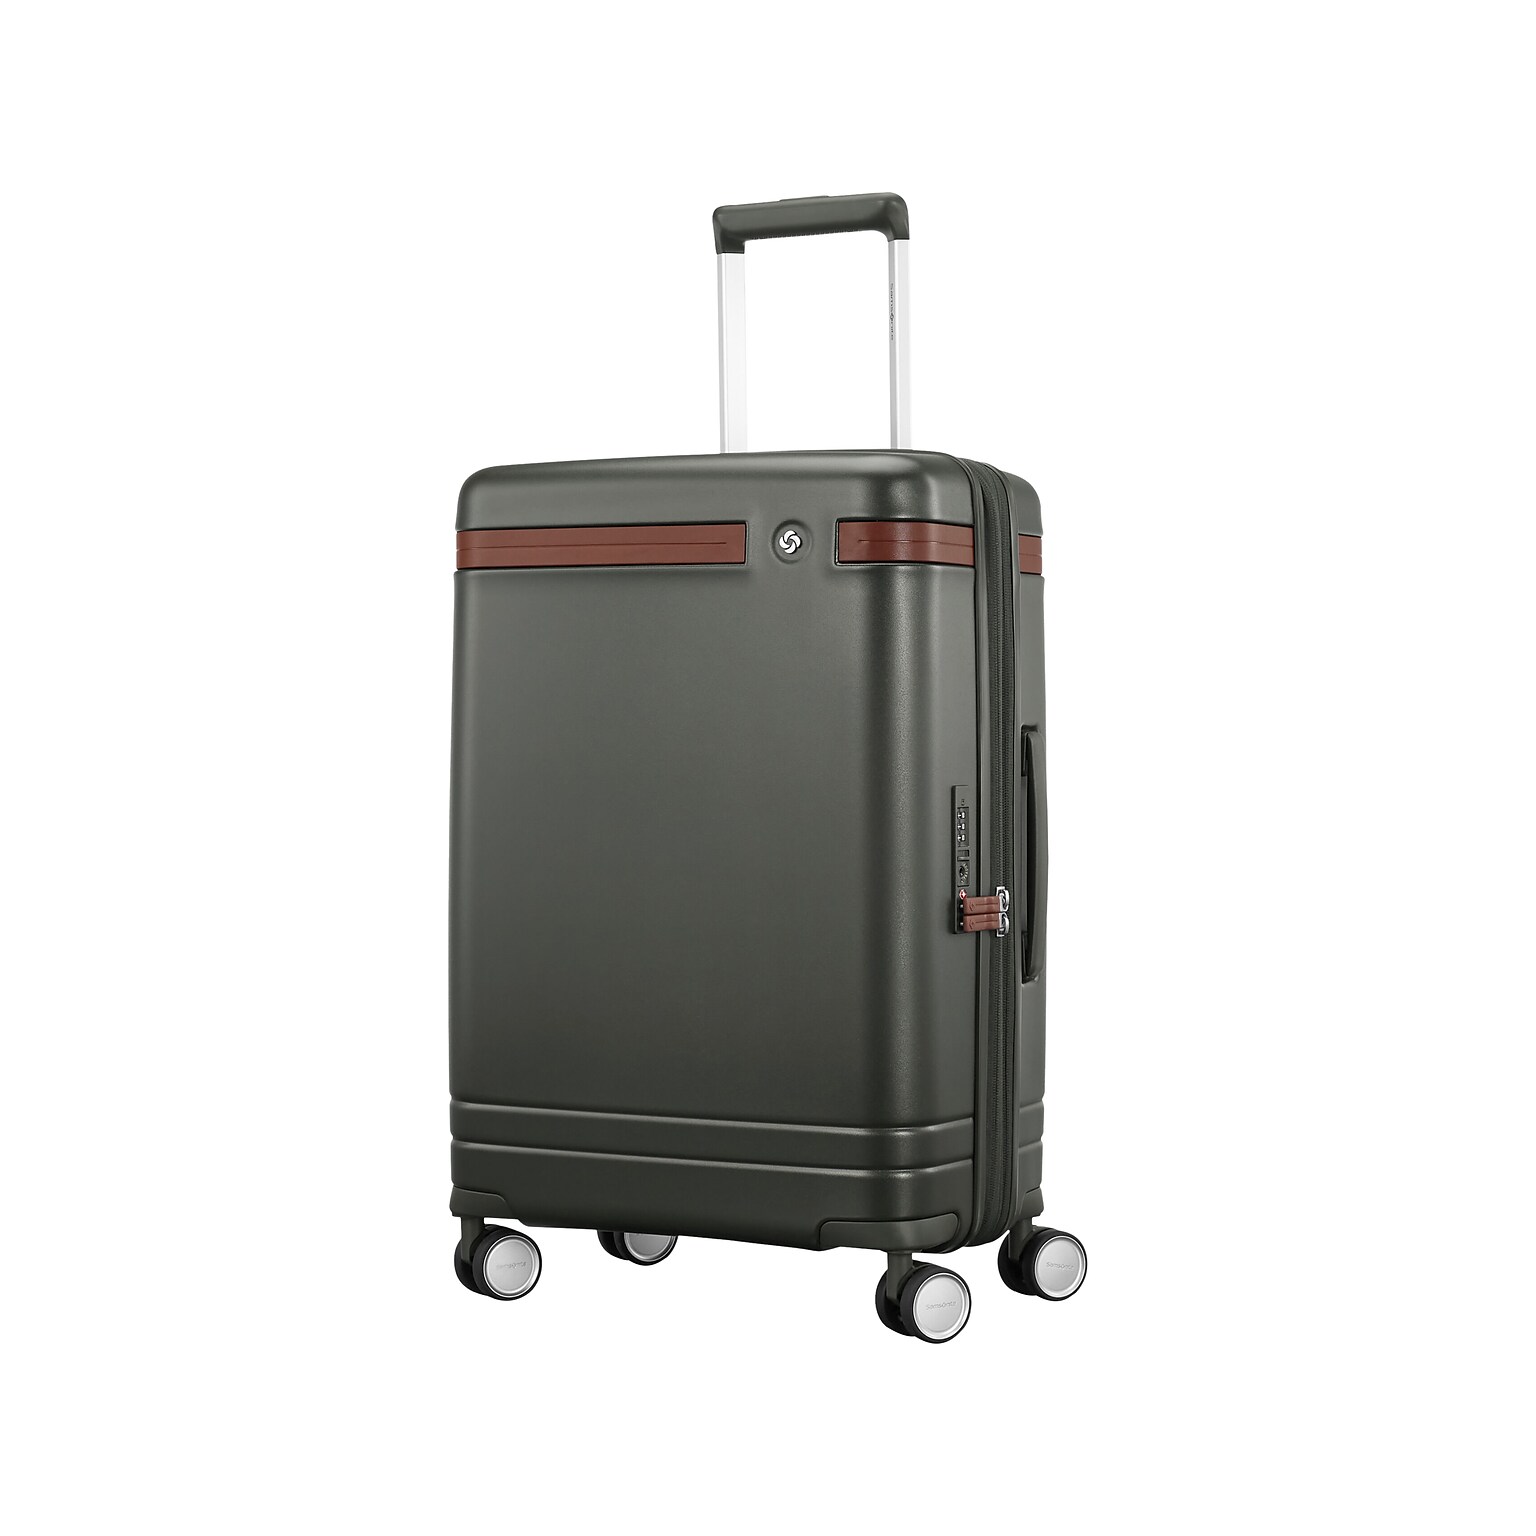 Samsonite Virtuosa 23 Hardside Carry-On Suitcase, 4-Wheeled Spinner, TSA Checkpoint Friendly, Pine Green (149176-1693)